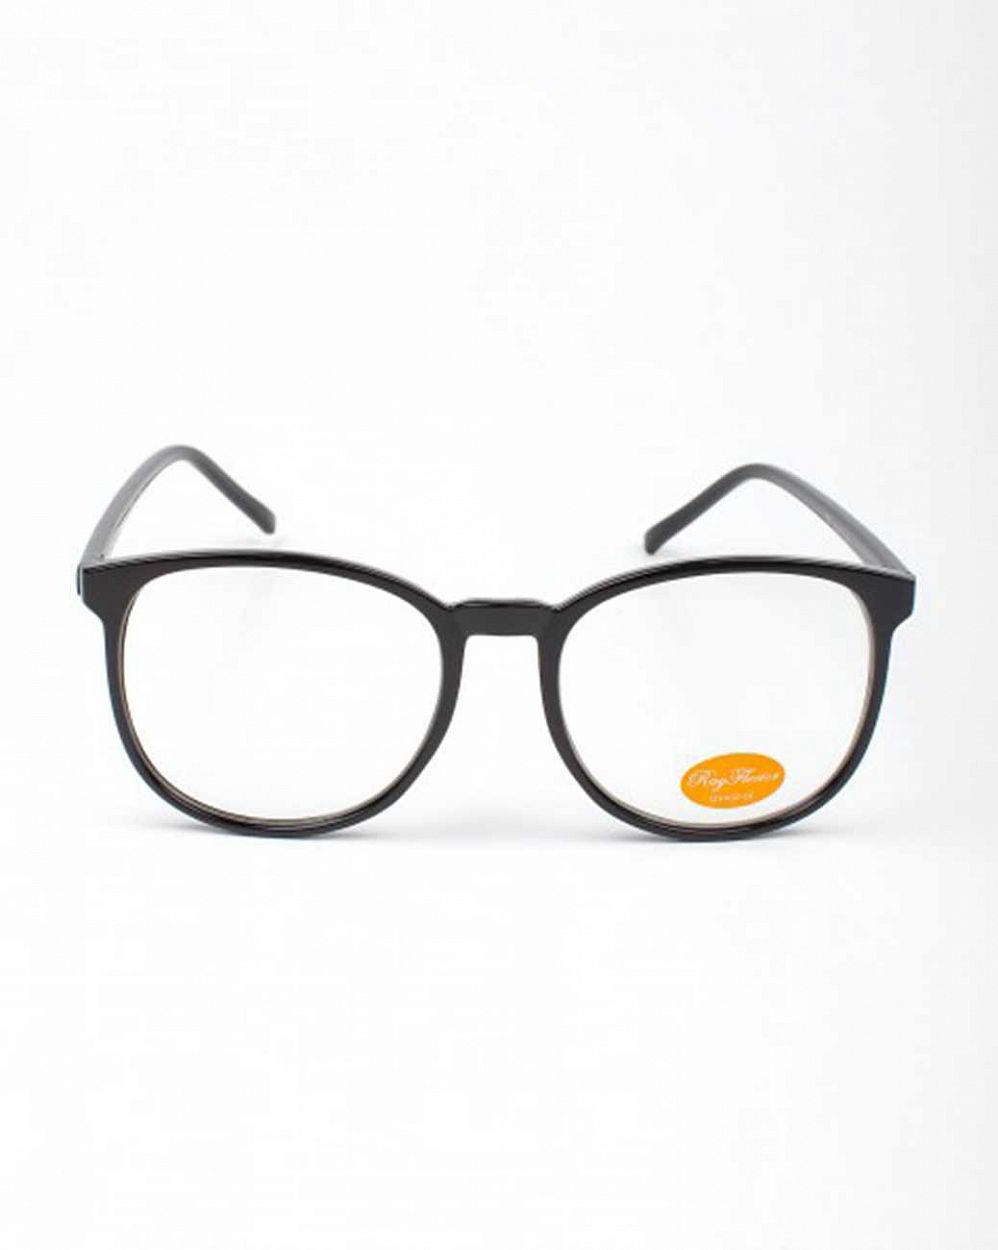 Очки Sunglasses Clear Lens Geek Roundish Vintage Black отзывы